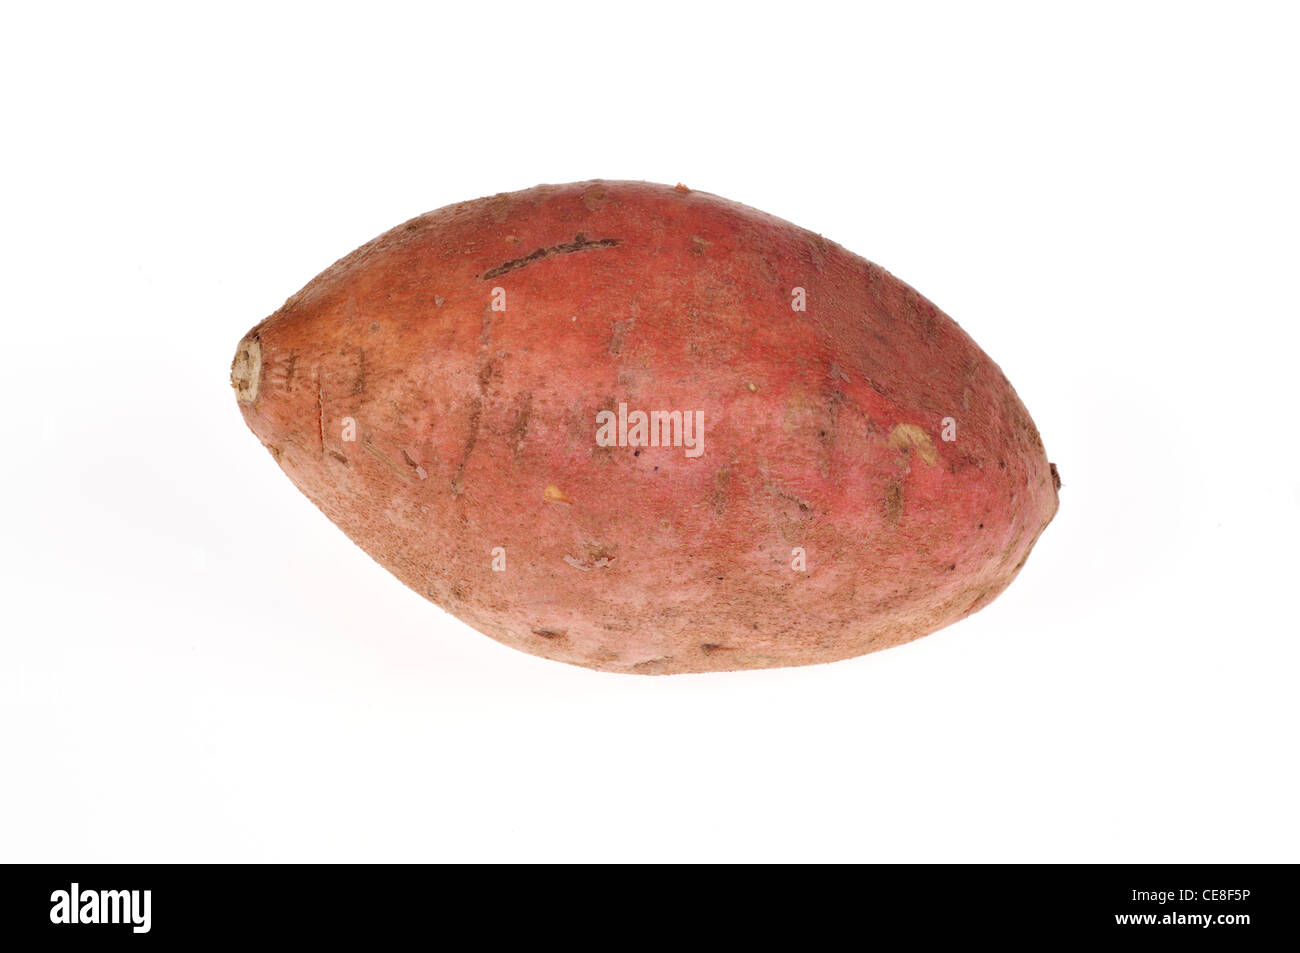 Single uncooked raw sweet potato  yam with skin on white background cutout USA Stock Photo